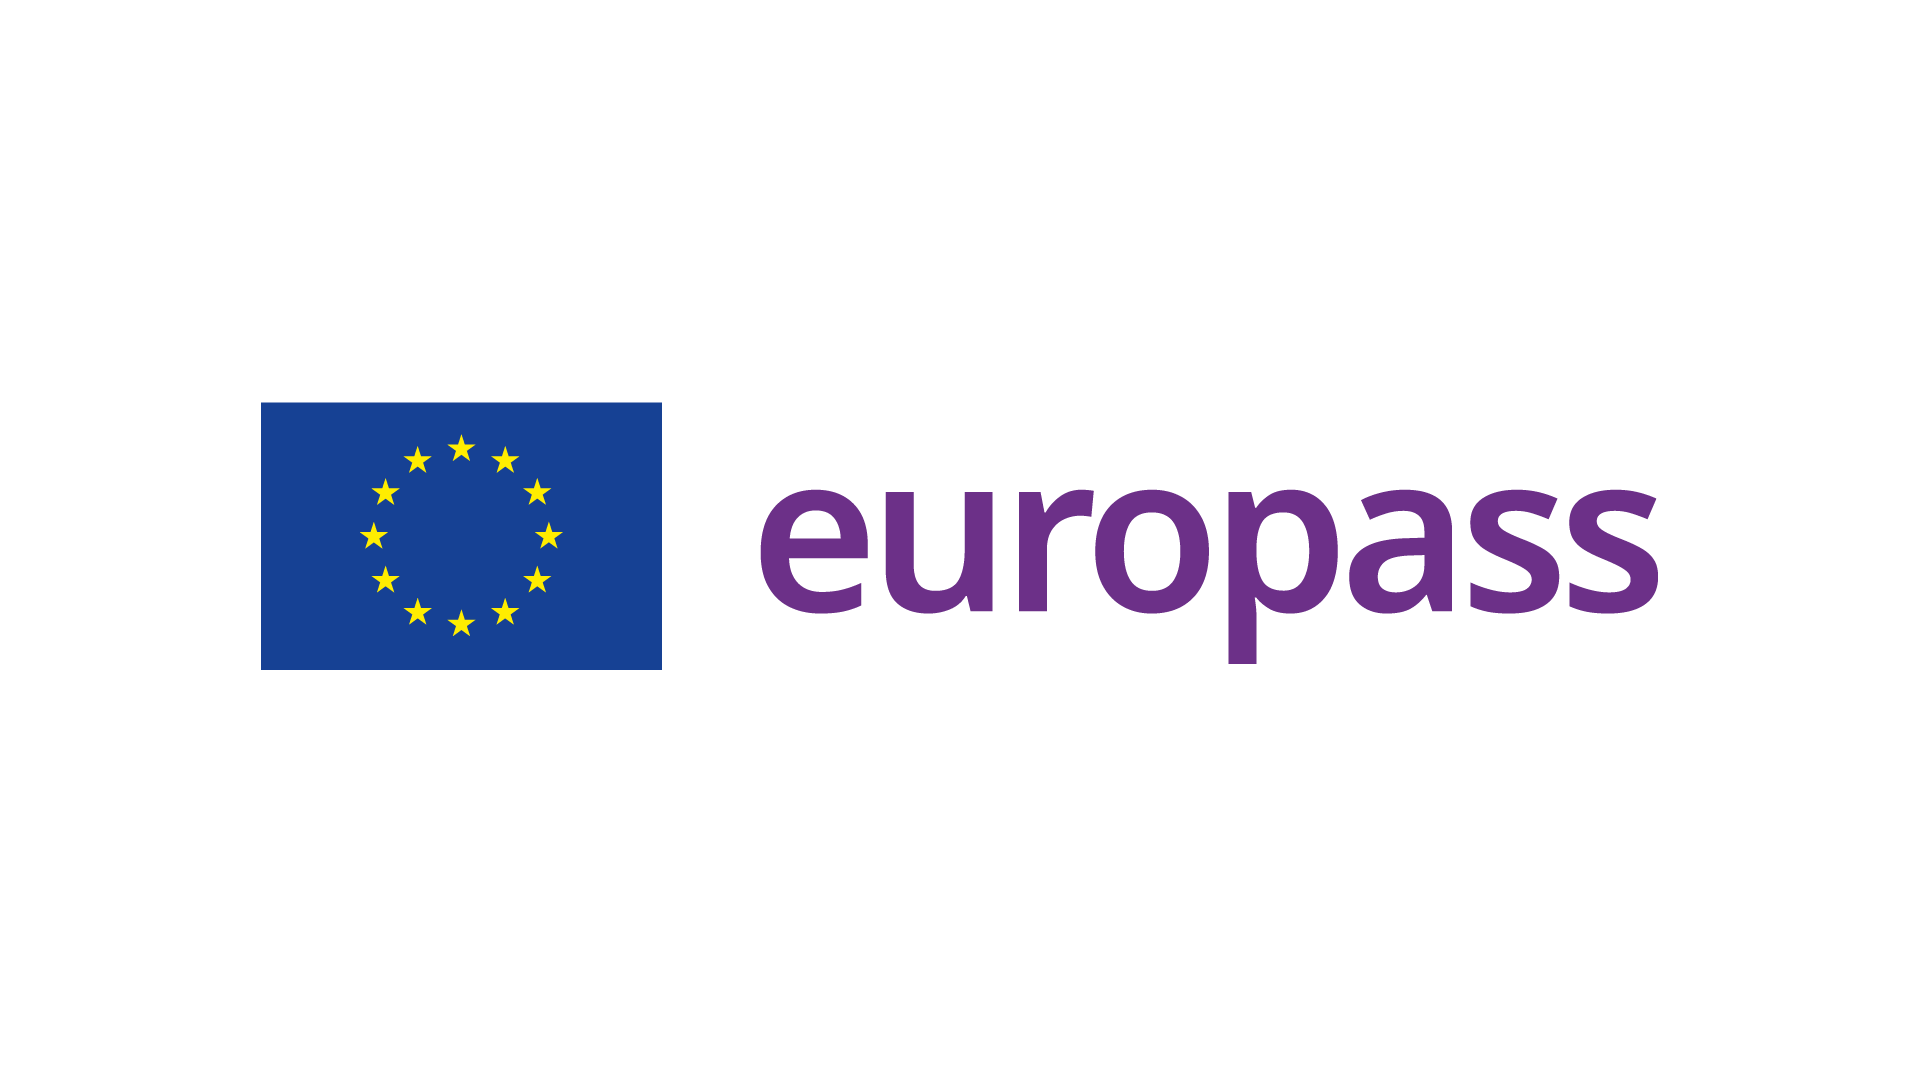 europass brandmark in purple colour